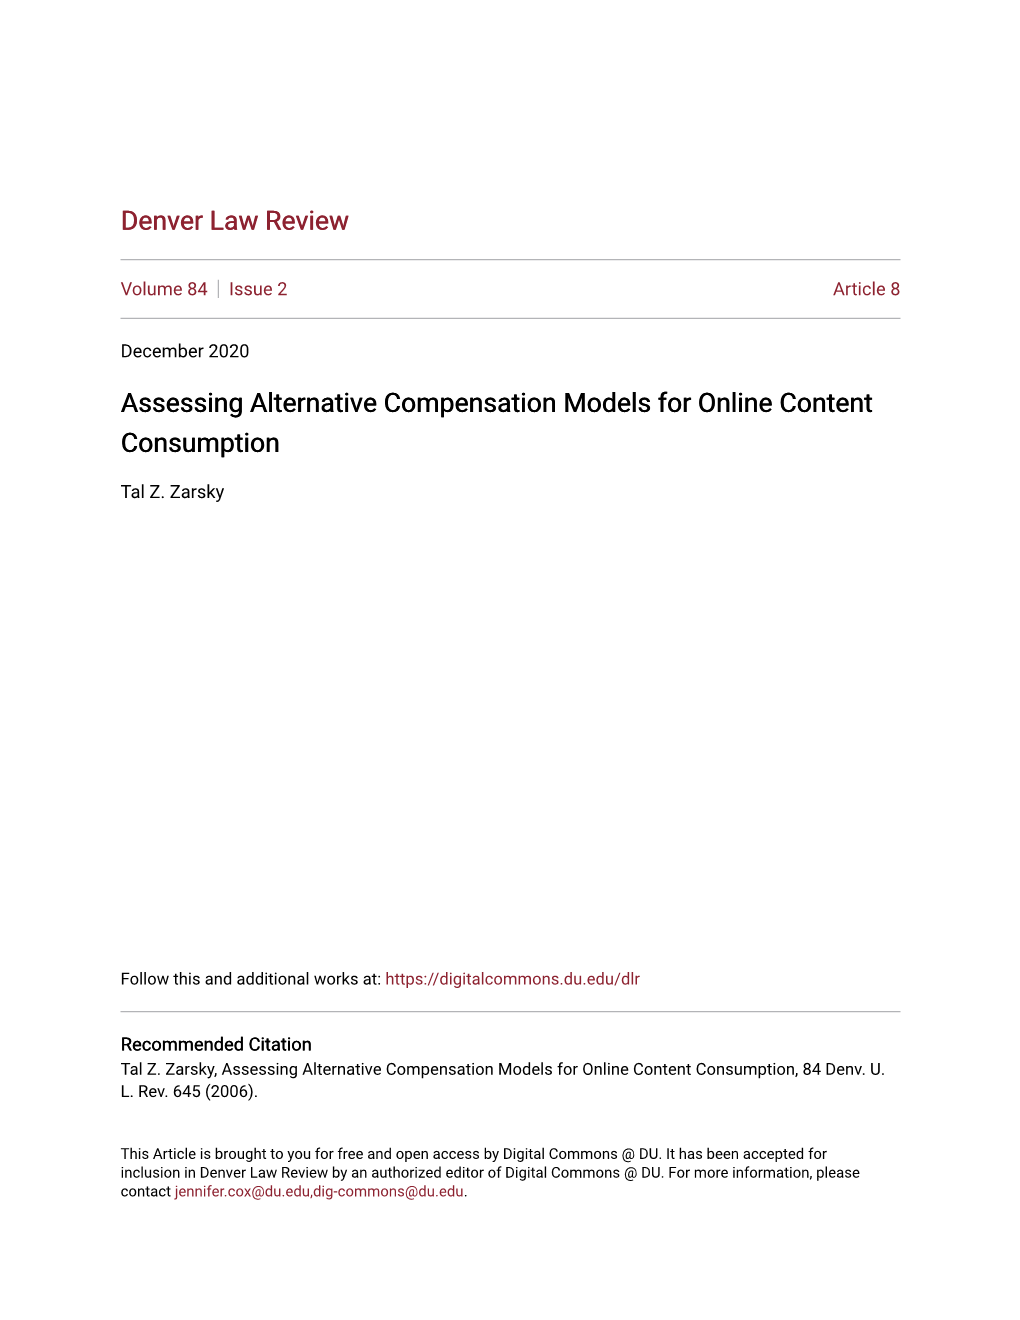 Assessing Alternative Compensation Models for Online Content Consumption